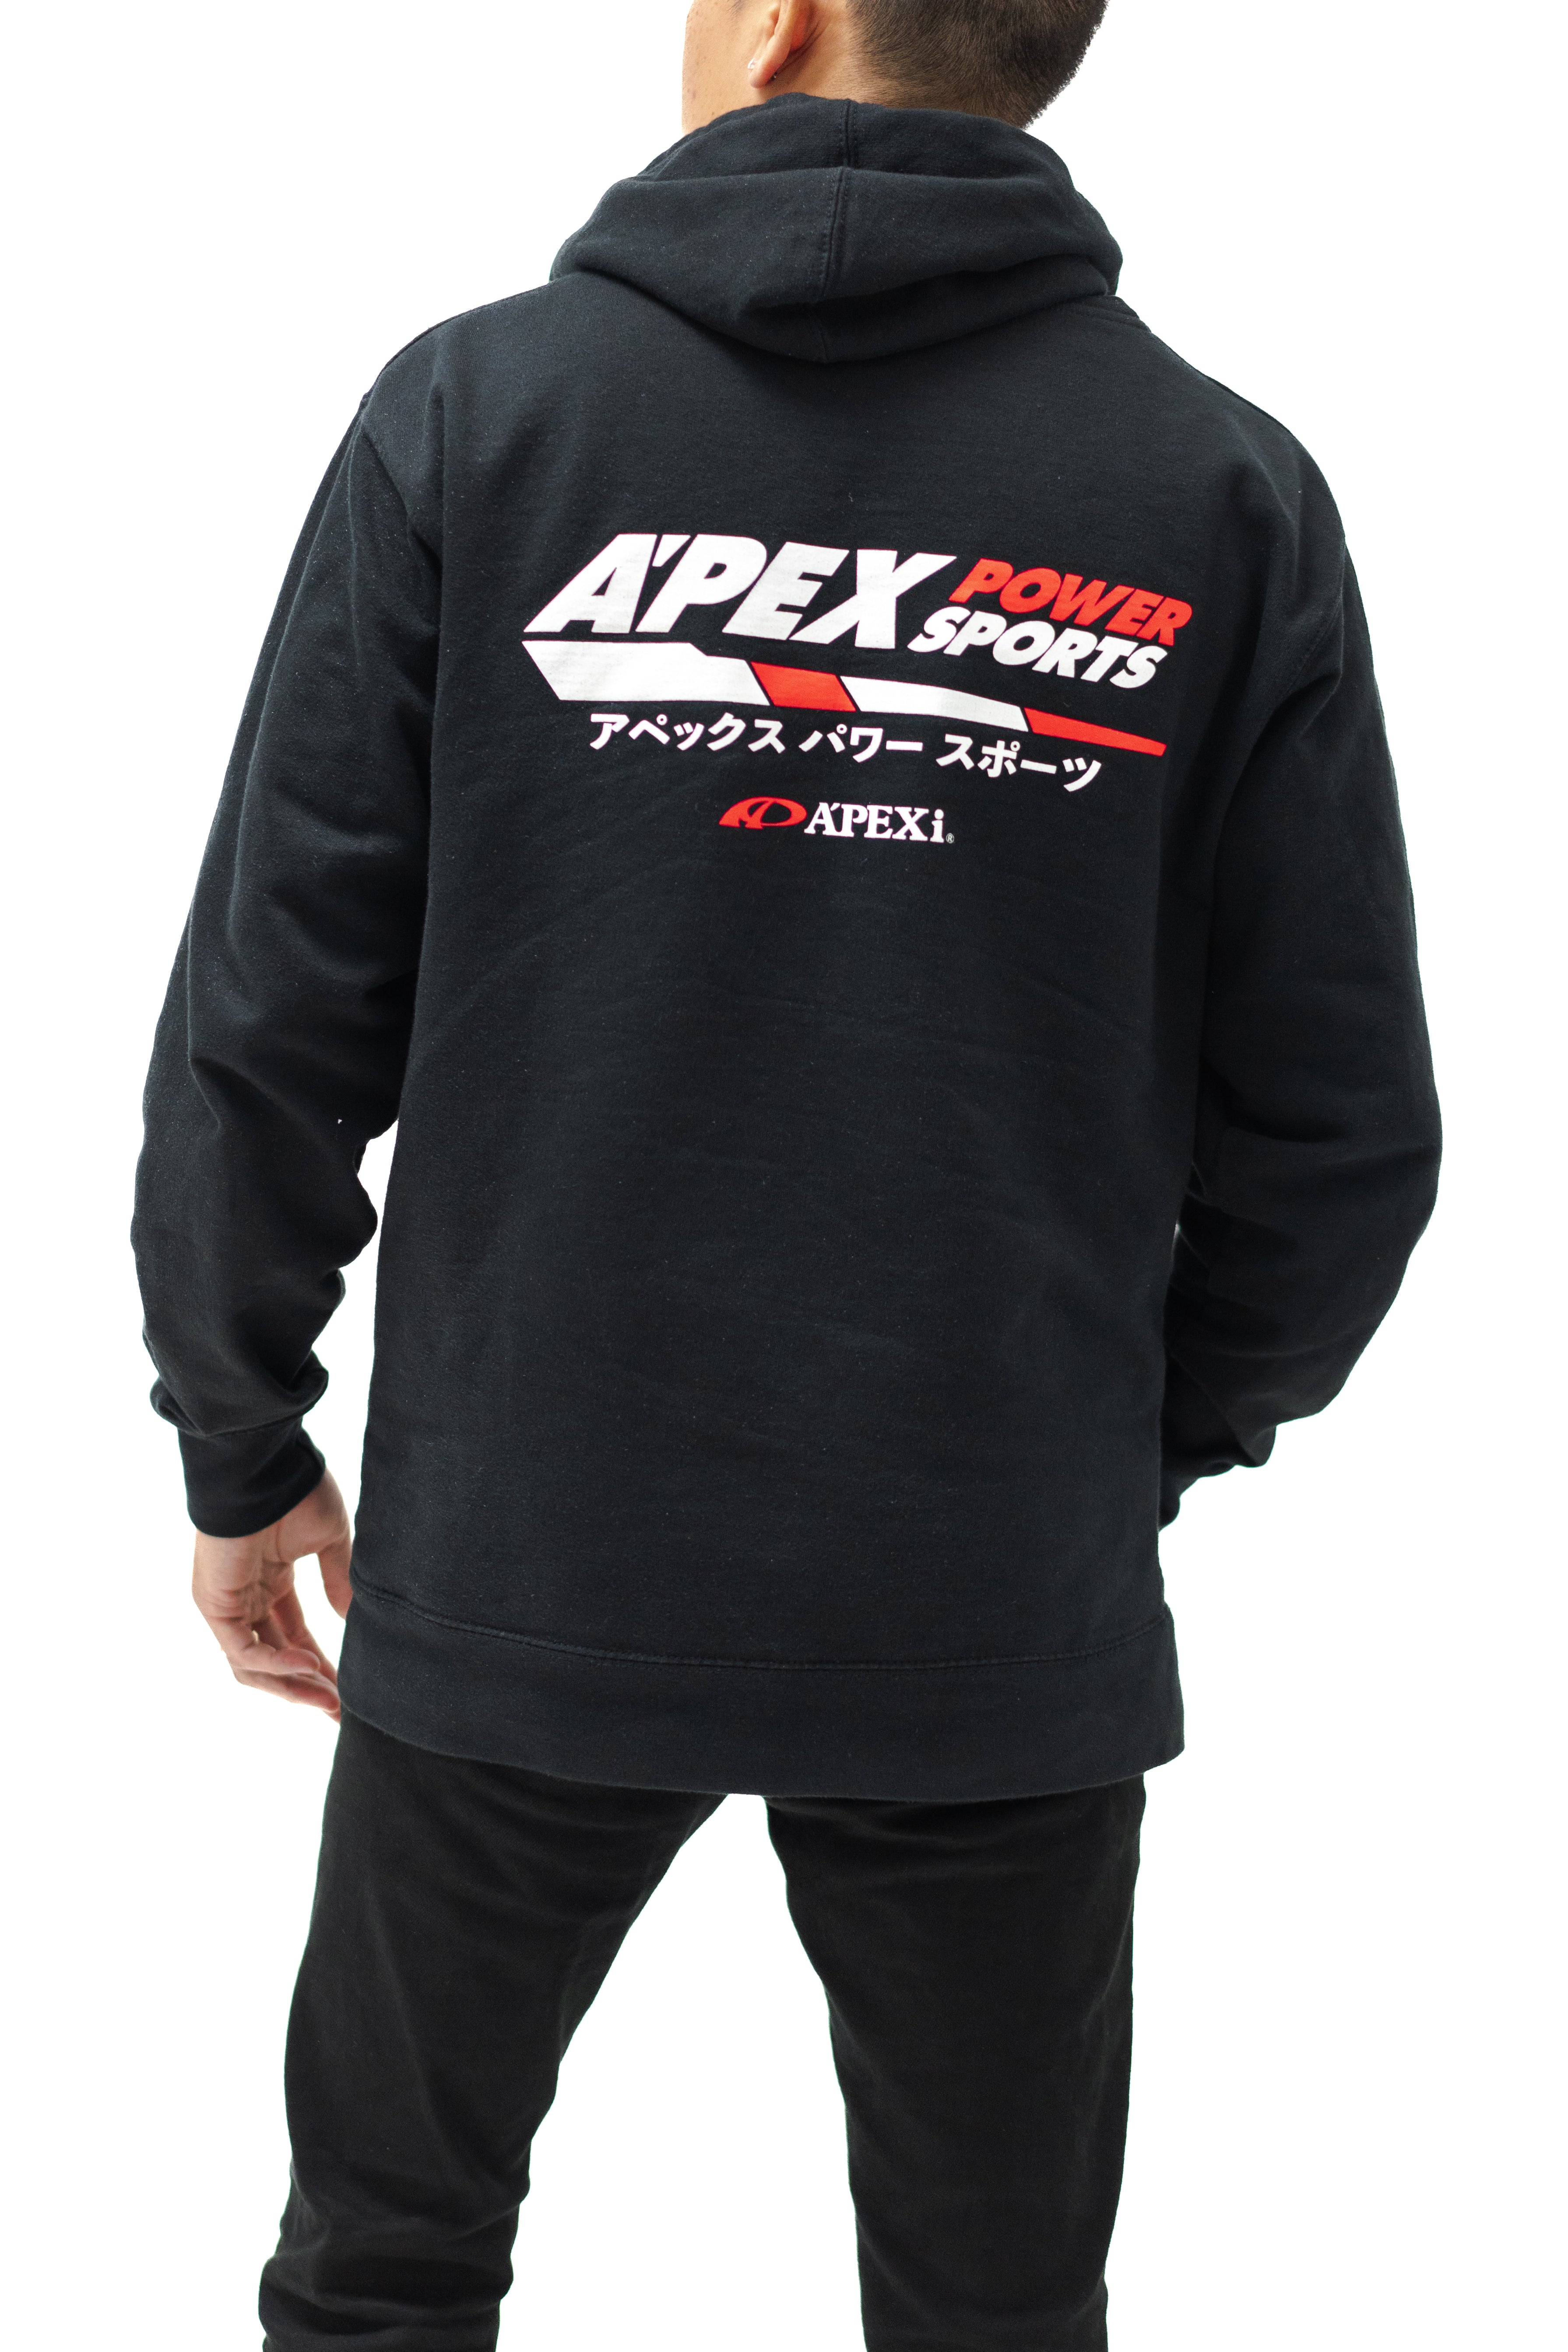 A'PEXi - APEX Power Sports Zip-Up Hoodie